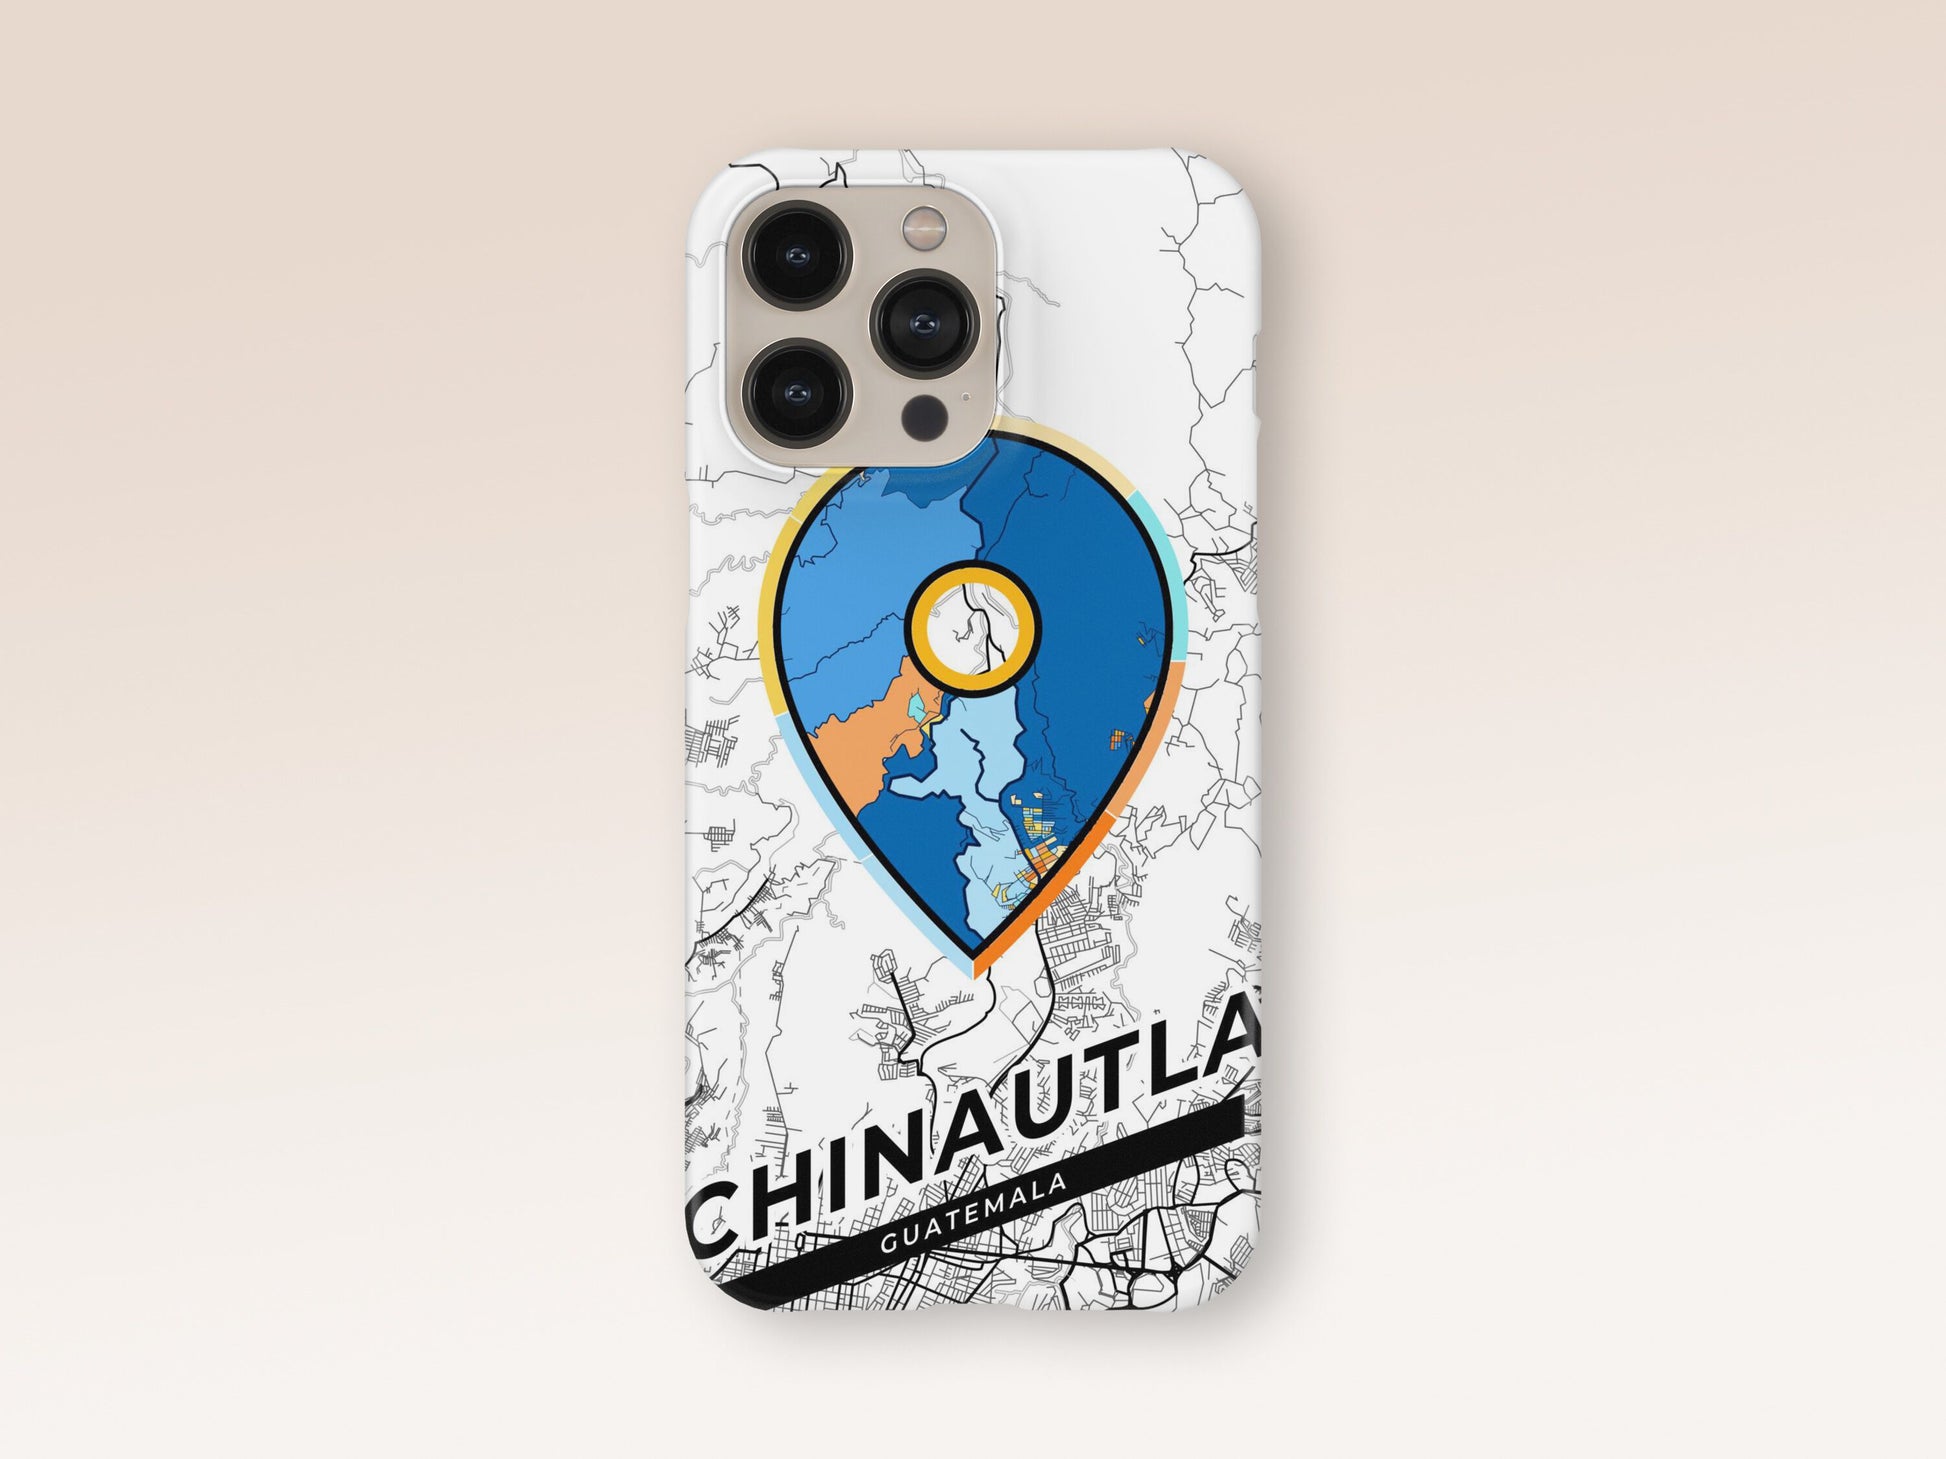 Chinautla Guatemala slim phone case with colorful icon. Birthday, wedding or housewarming gift. Couple match cases. 1